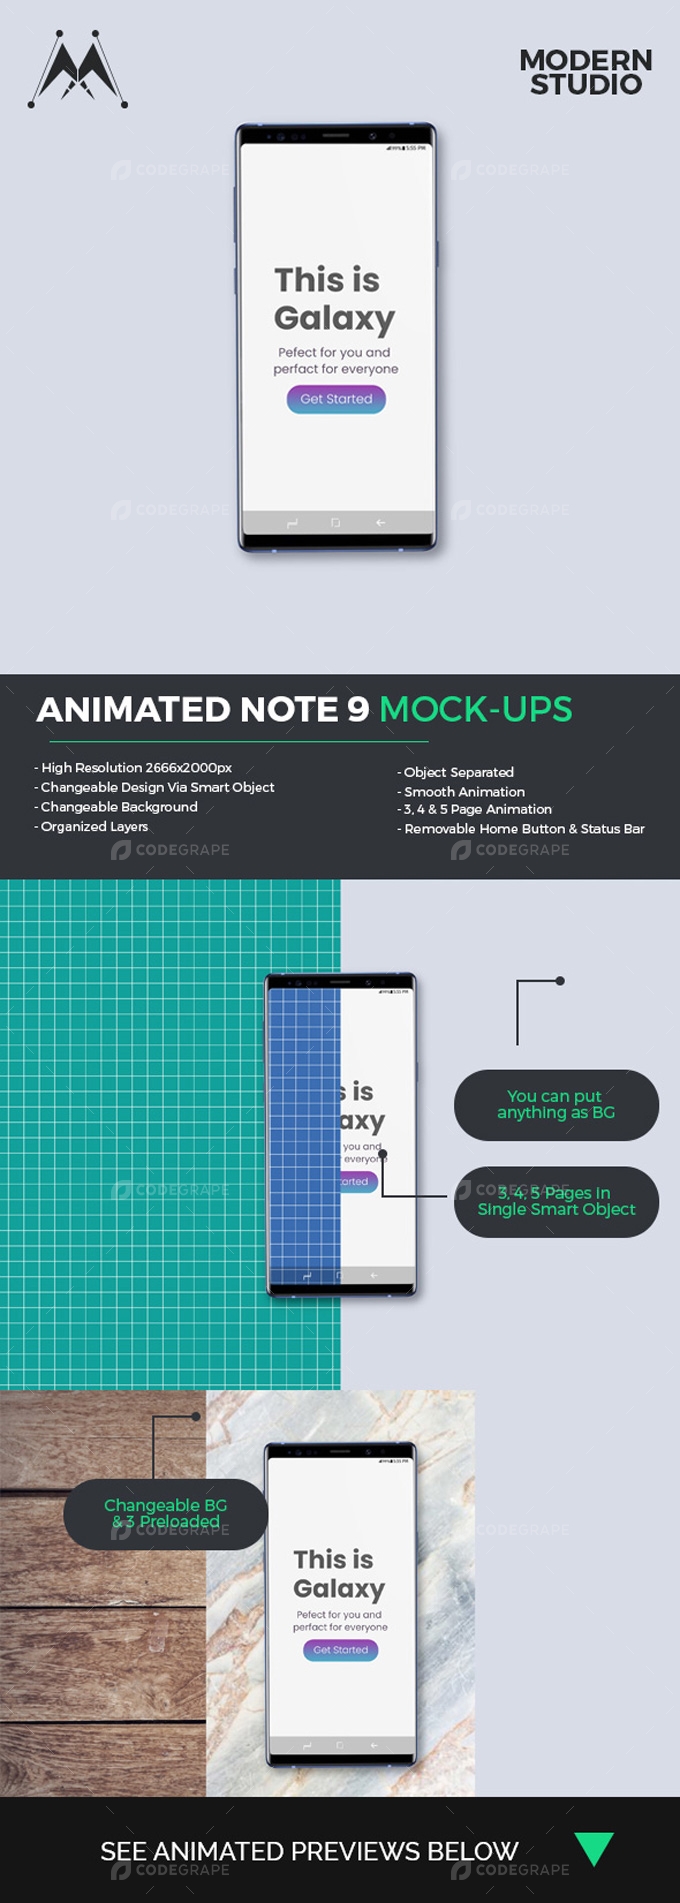 Animated Galaxy Note 9 Mockup